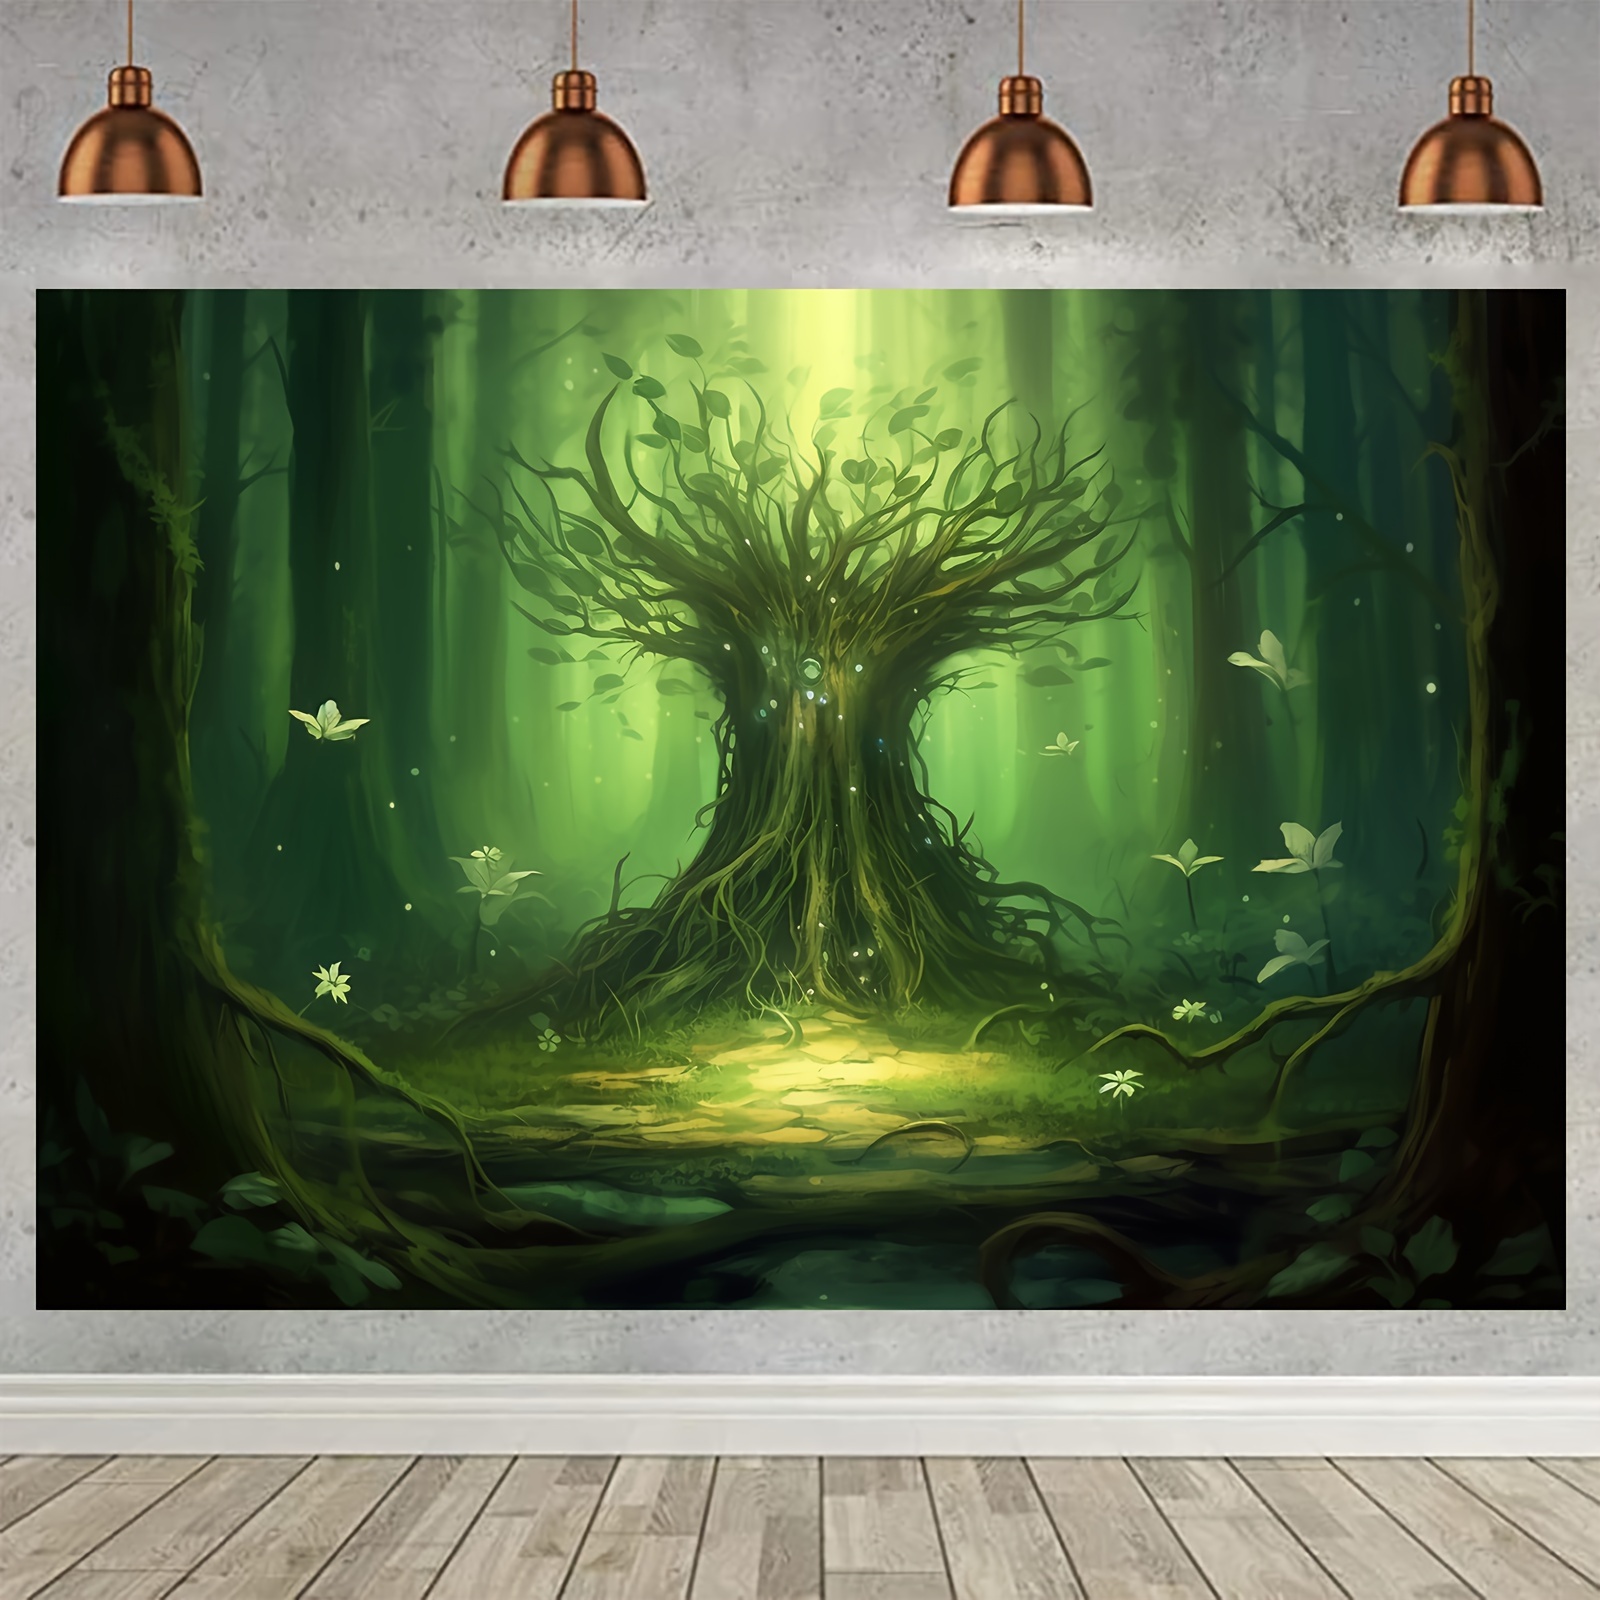 100g Forest Green Artificial Moss - Perfect For Fairy Gardens, Terrariums &  Crafts!